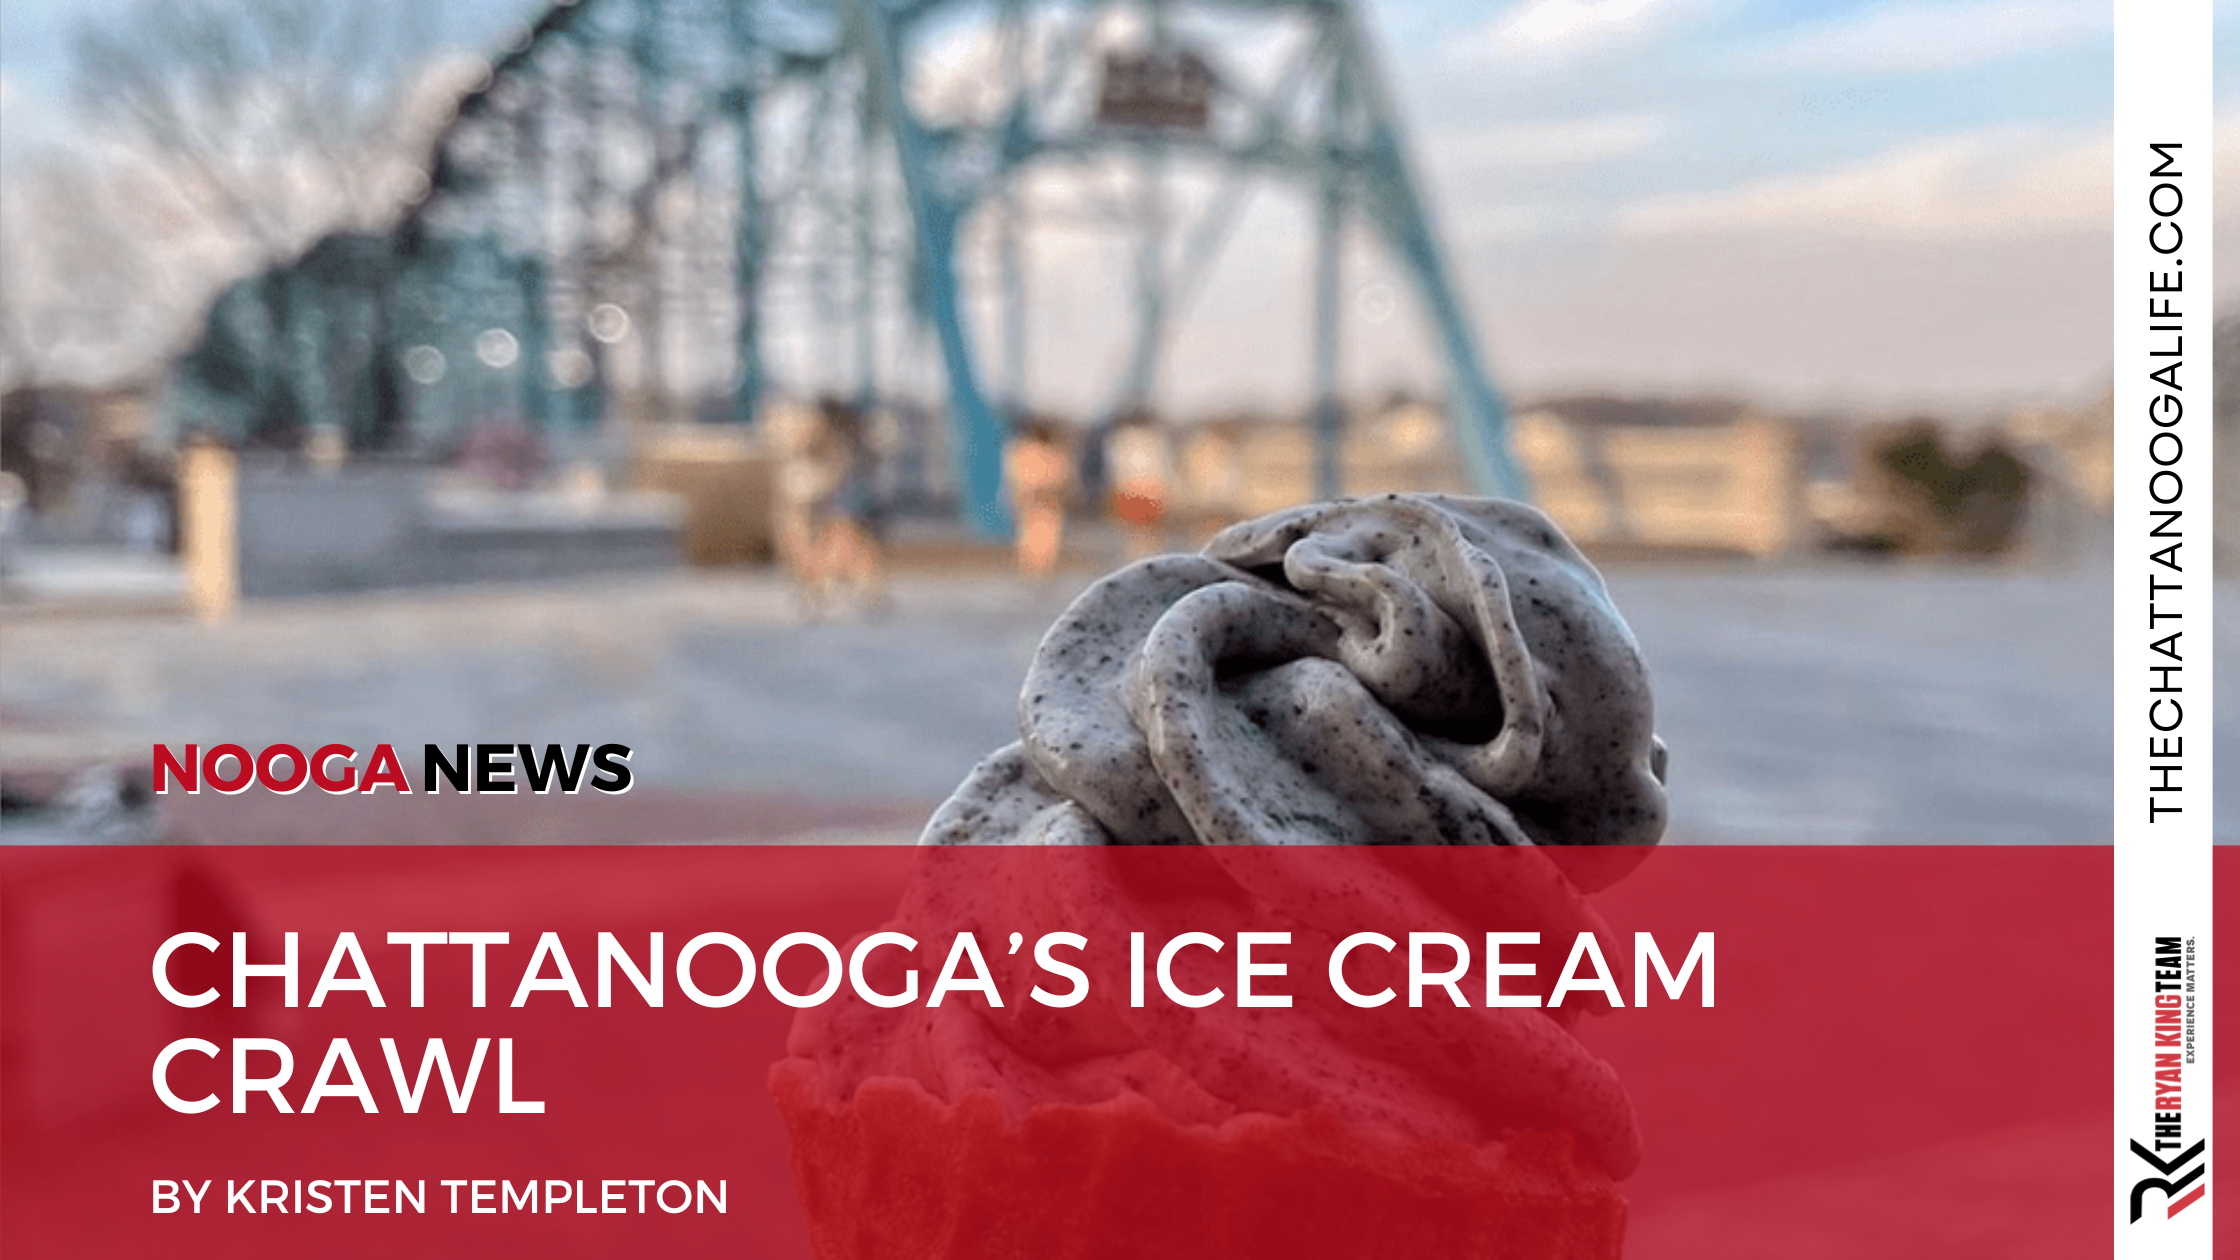 Chattanooga’s Ice Cream Crawl